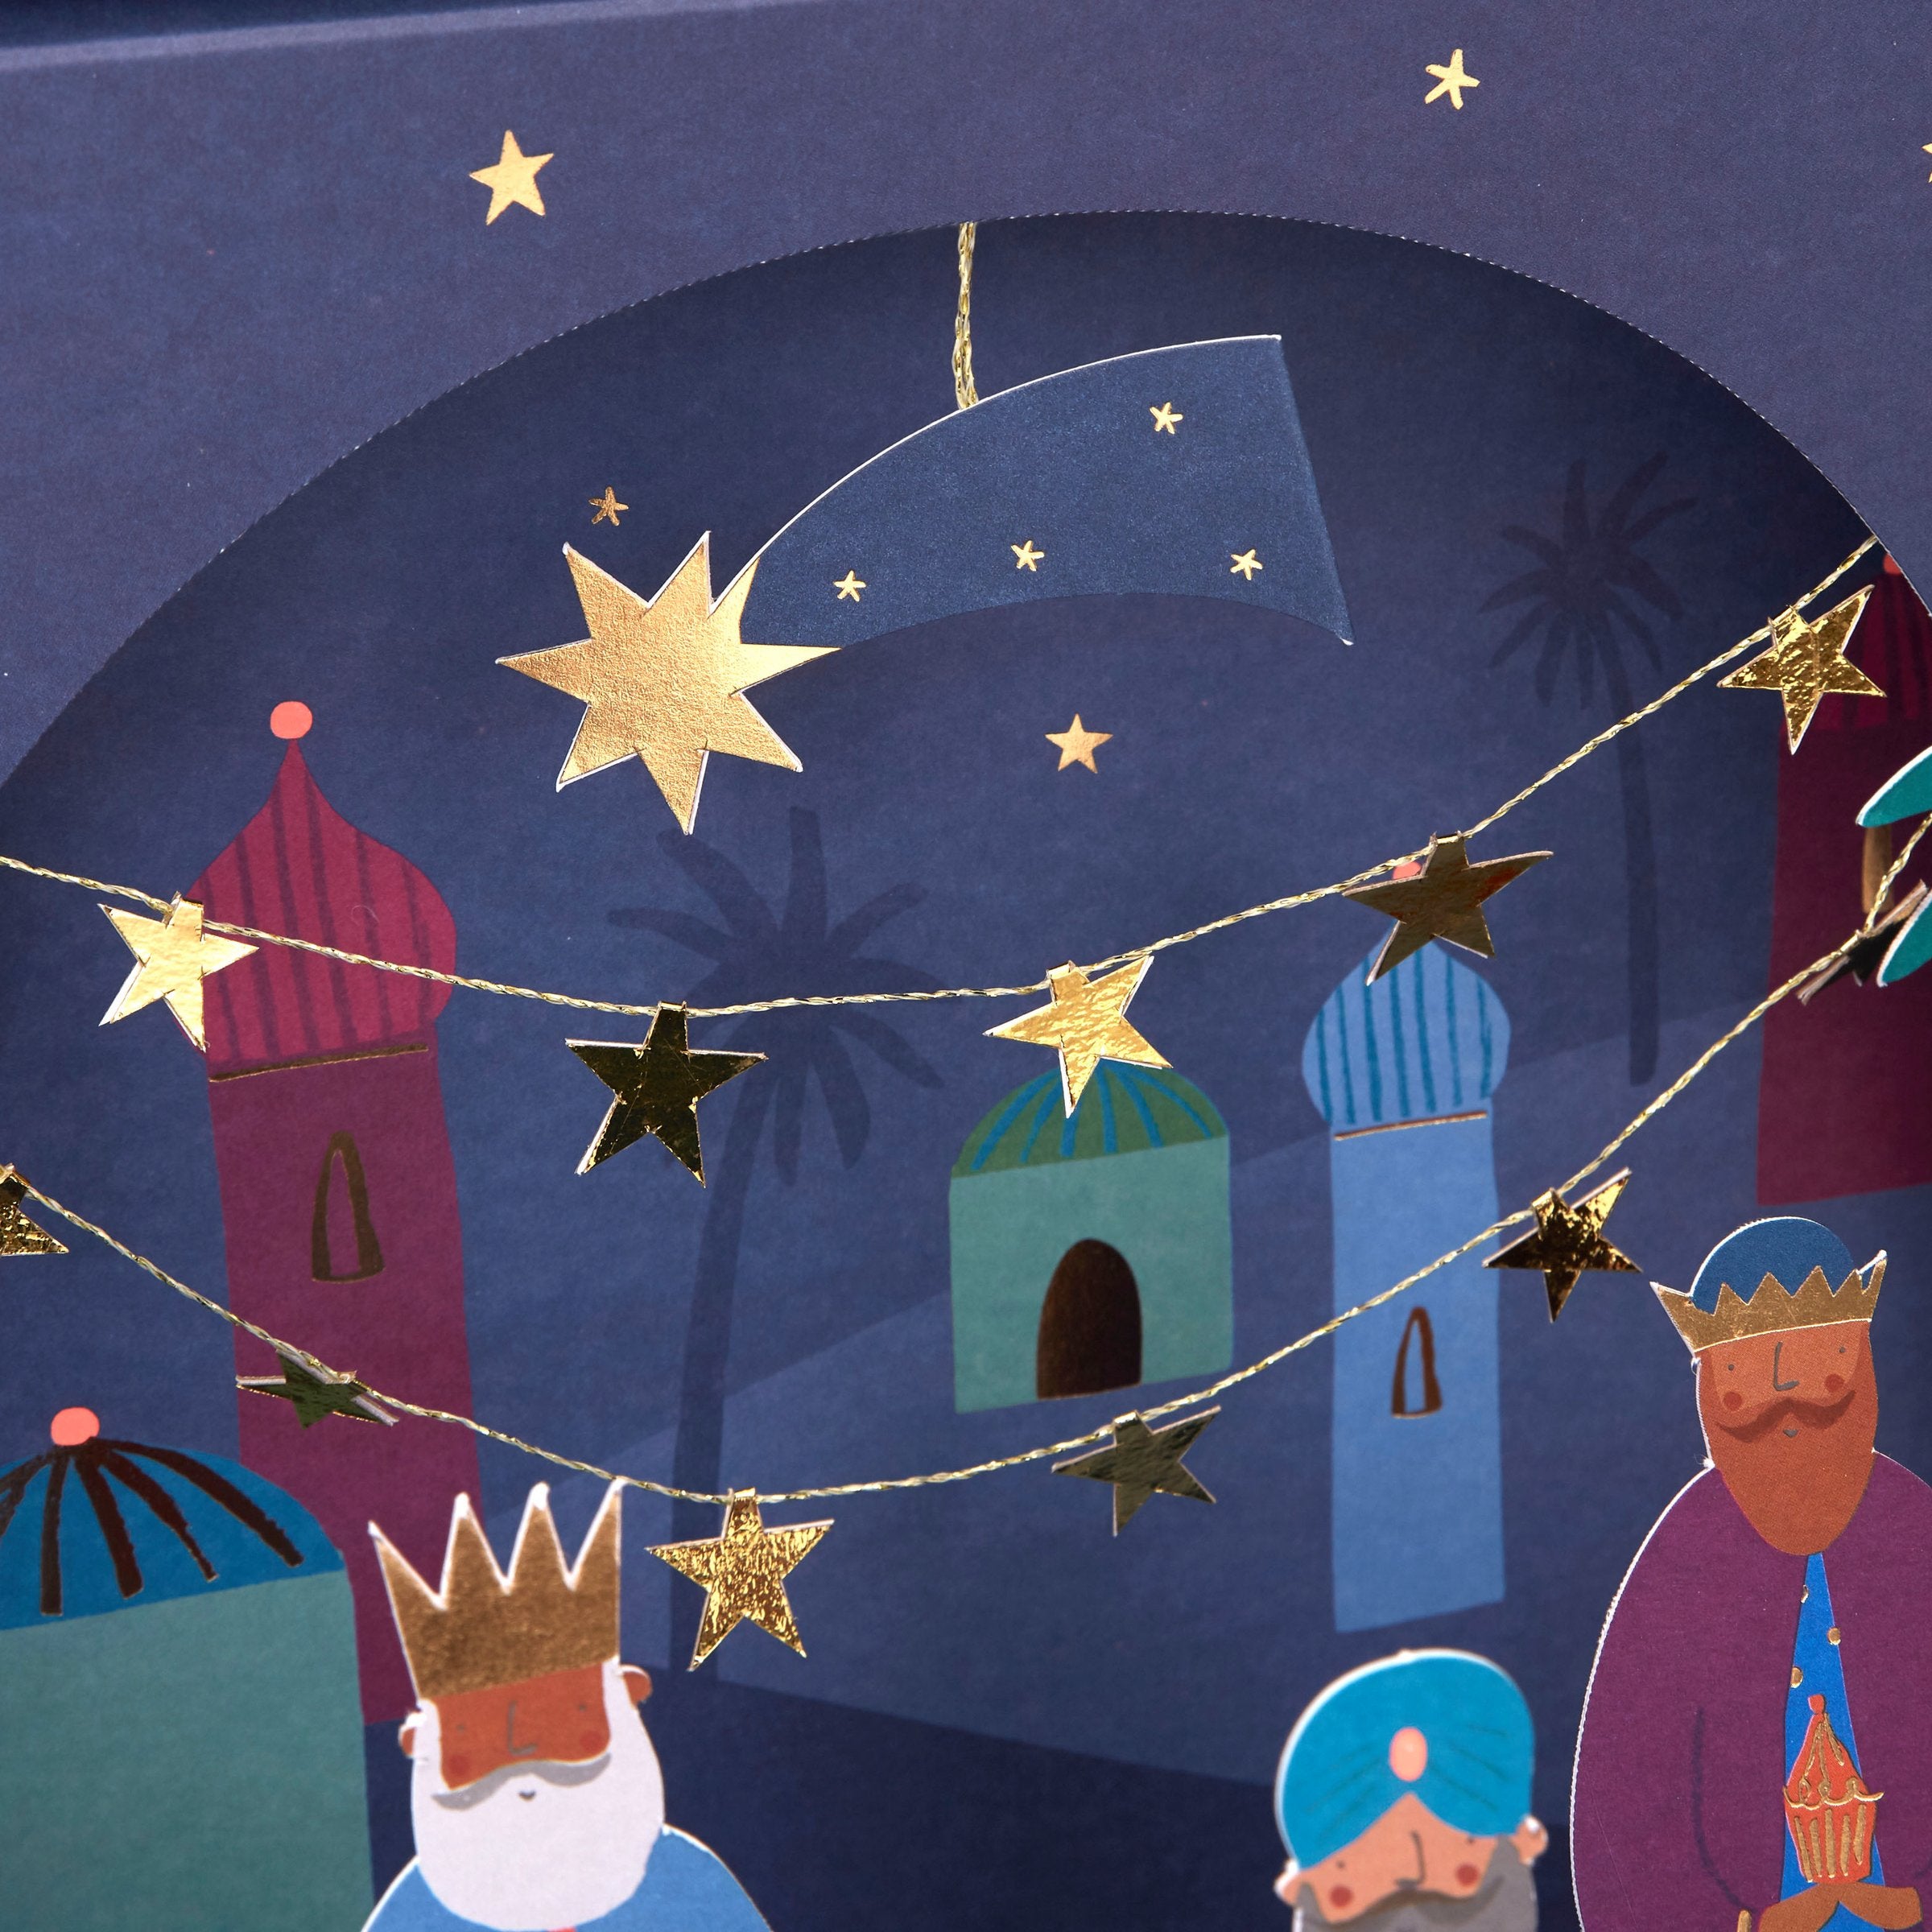 Create the nativity scene with this amazing advent calendar.